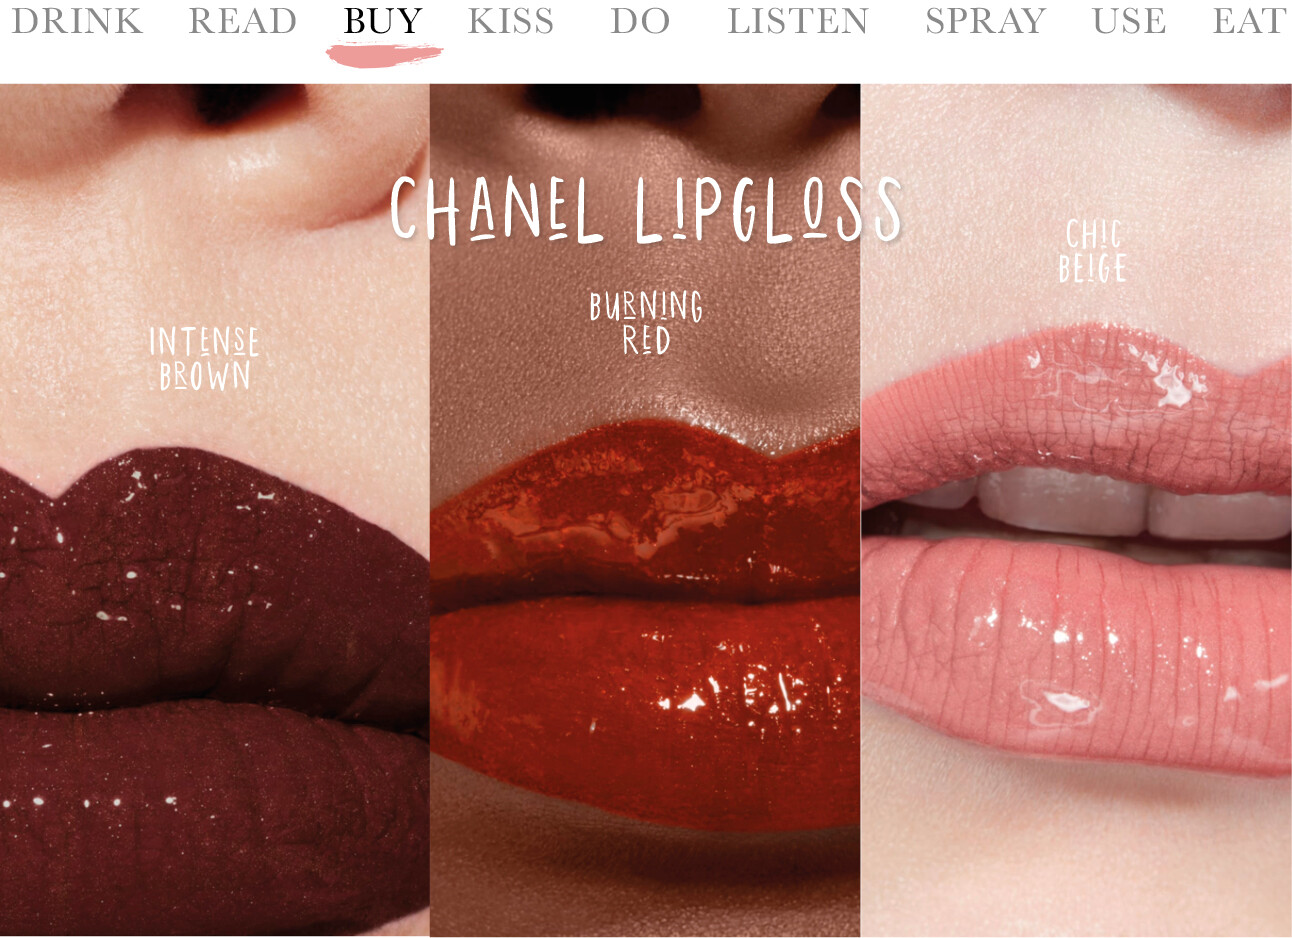 chanel lipgloss